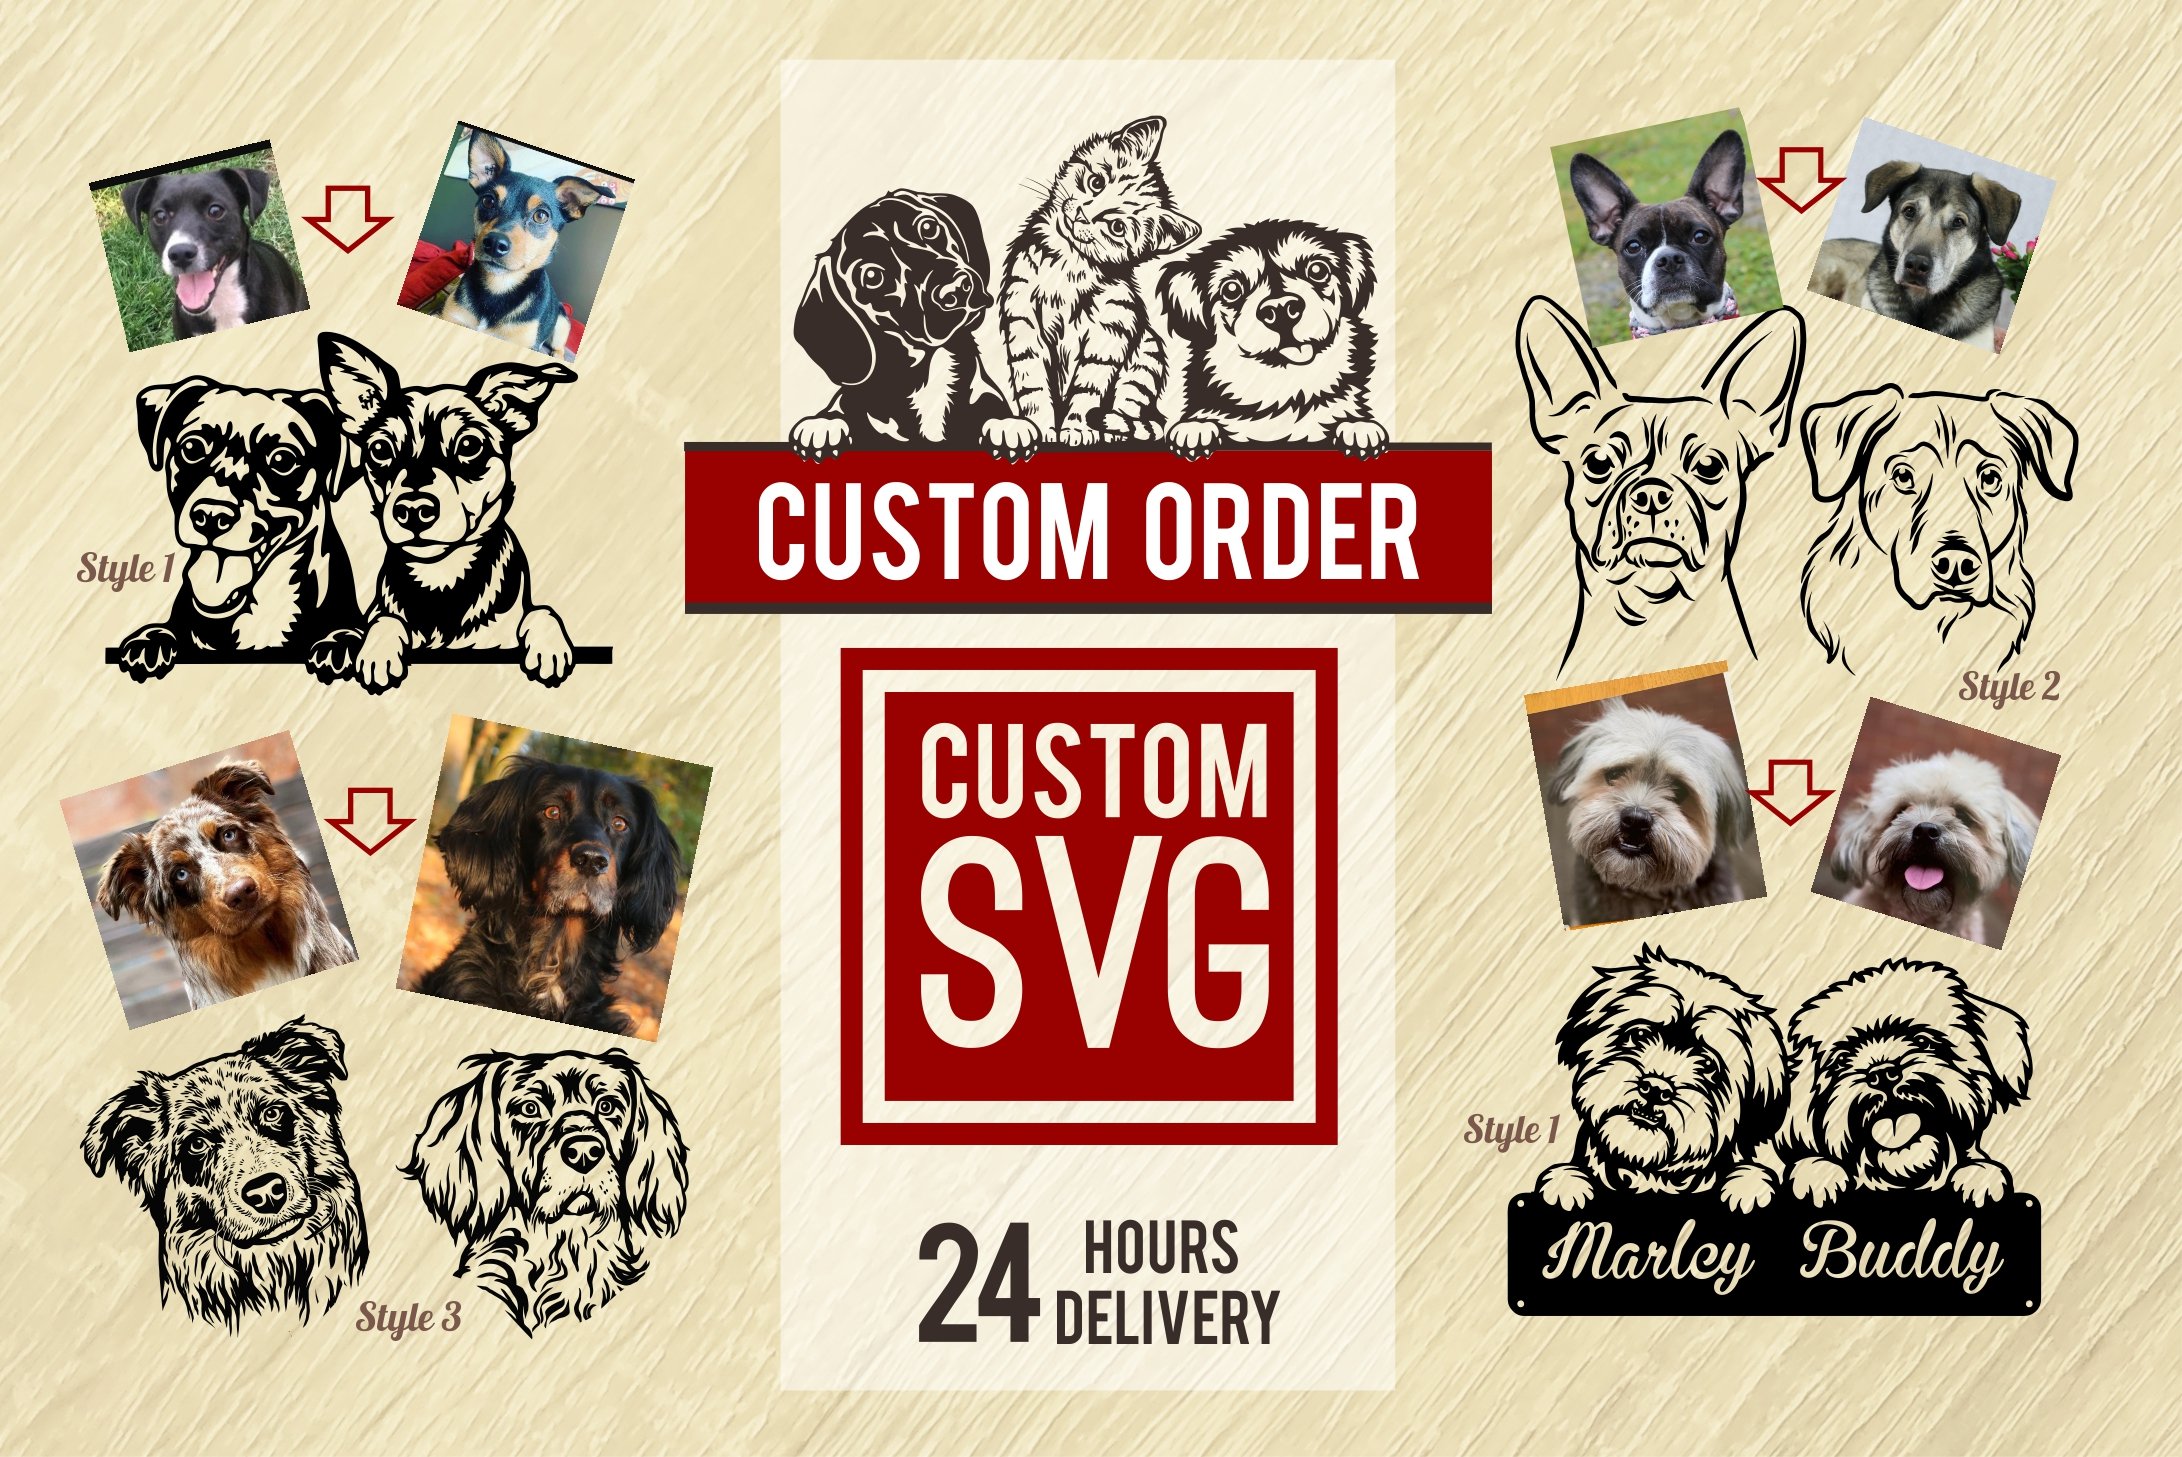 pets custom order service 281229 125